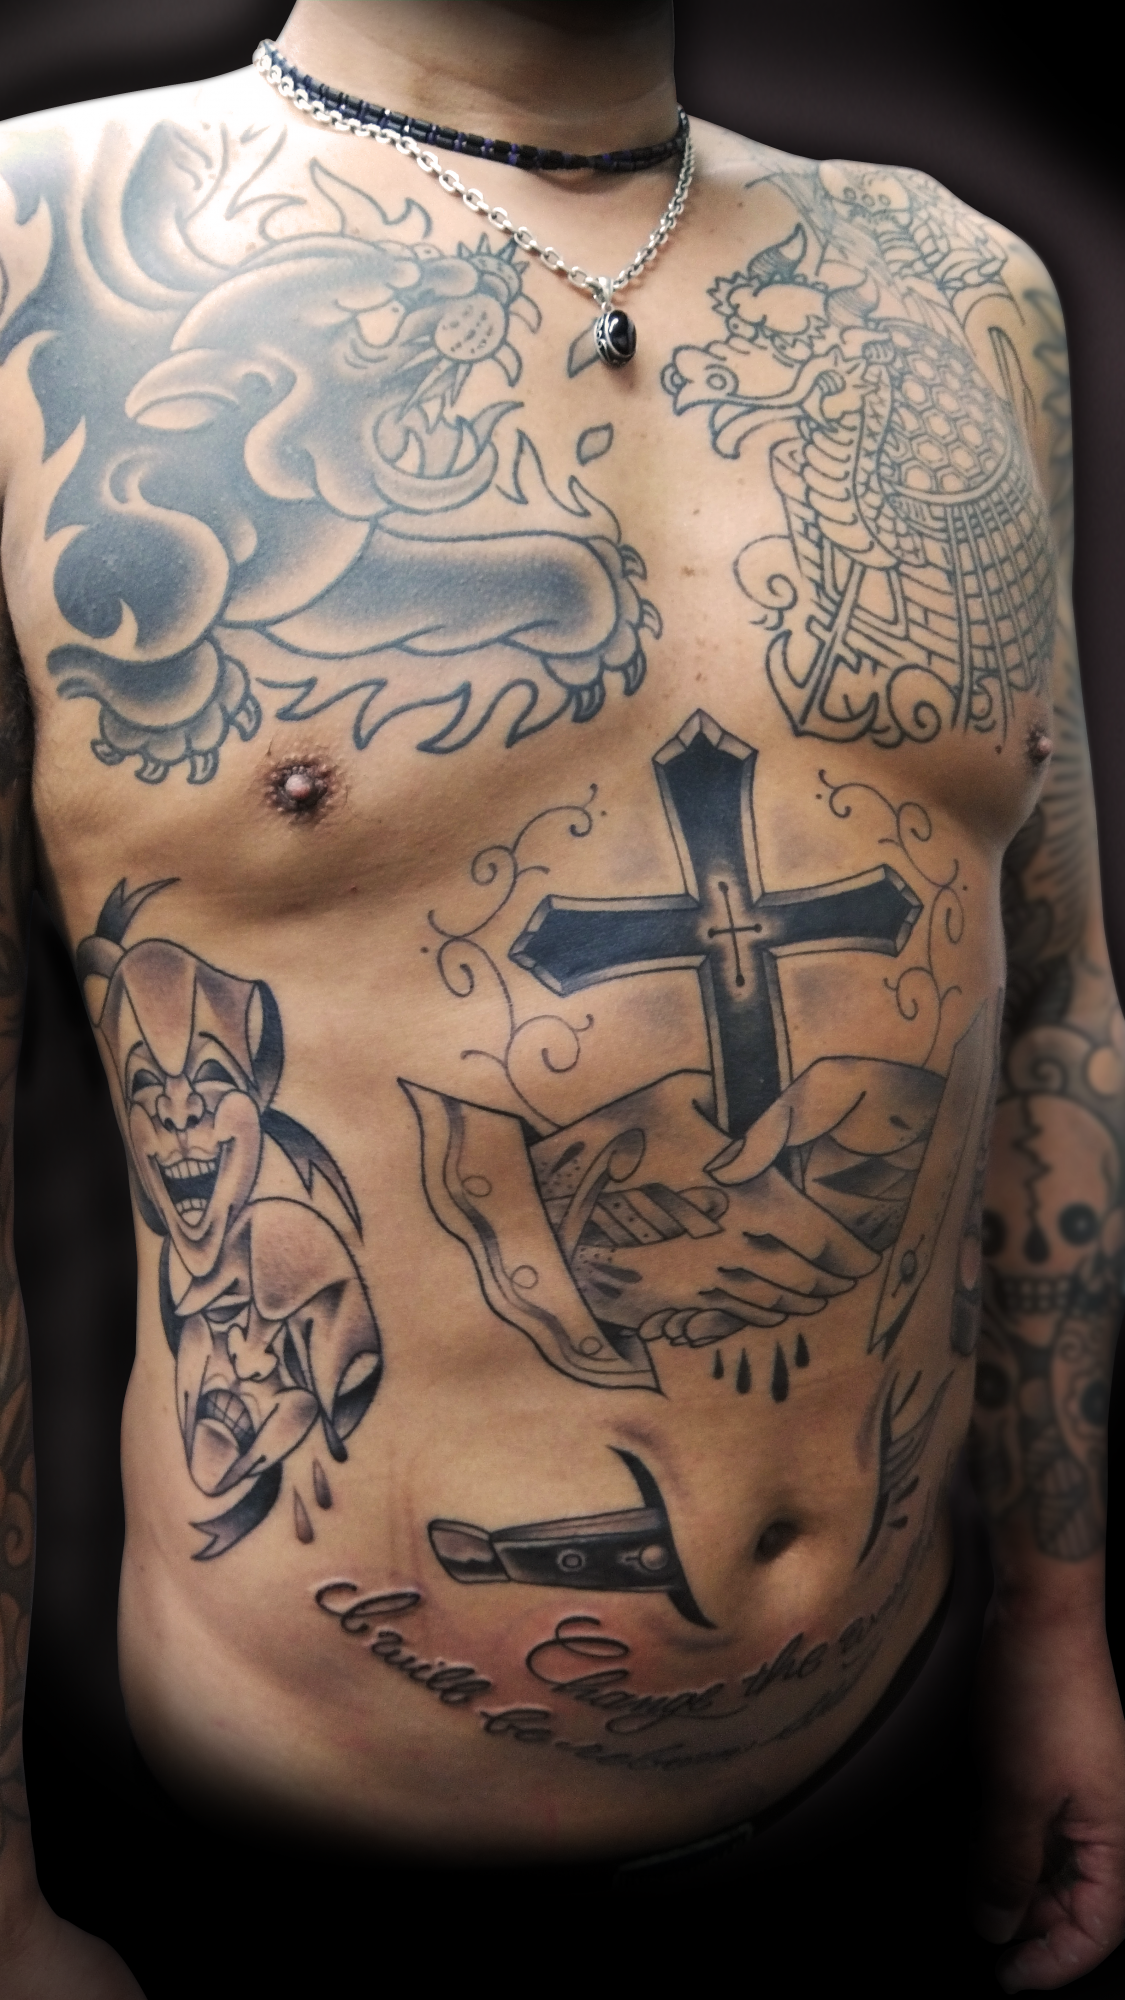 KINGRAT TATTOO 作品 | LAVA gallery | Tattoo artist: Yuji Anai | キングラット | ラバギャラリー | タトゥーアート | 福岡県北九州市 | krt_black_23